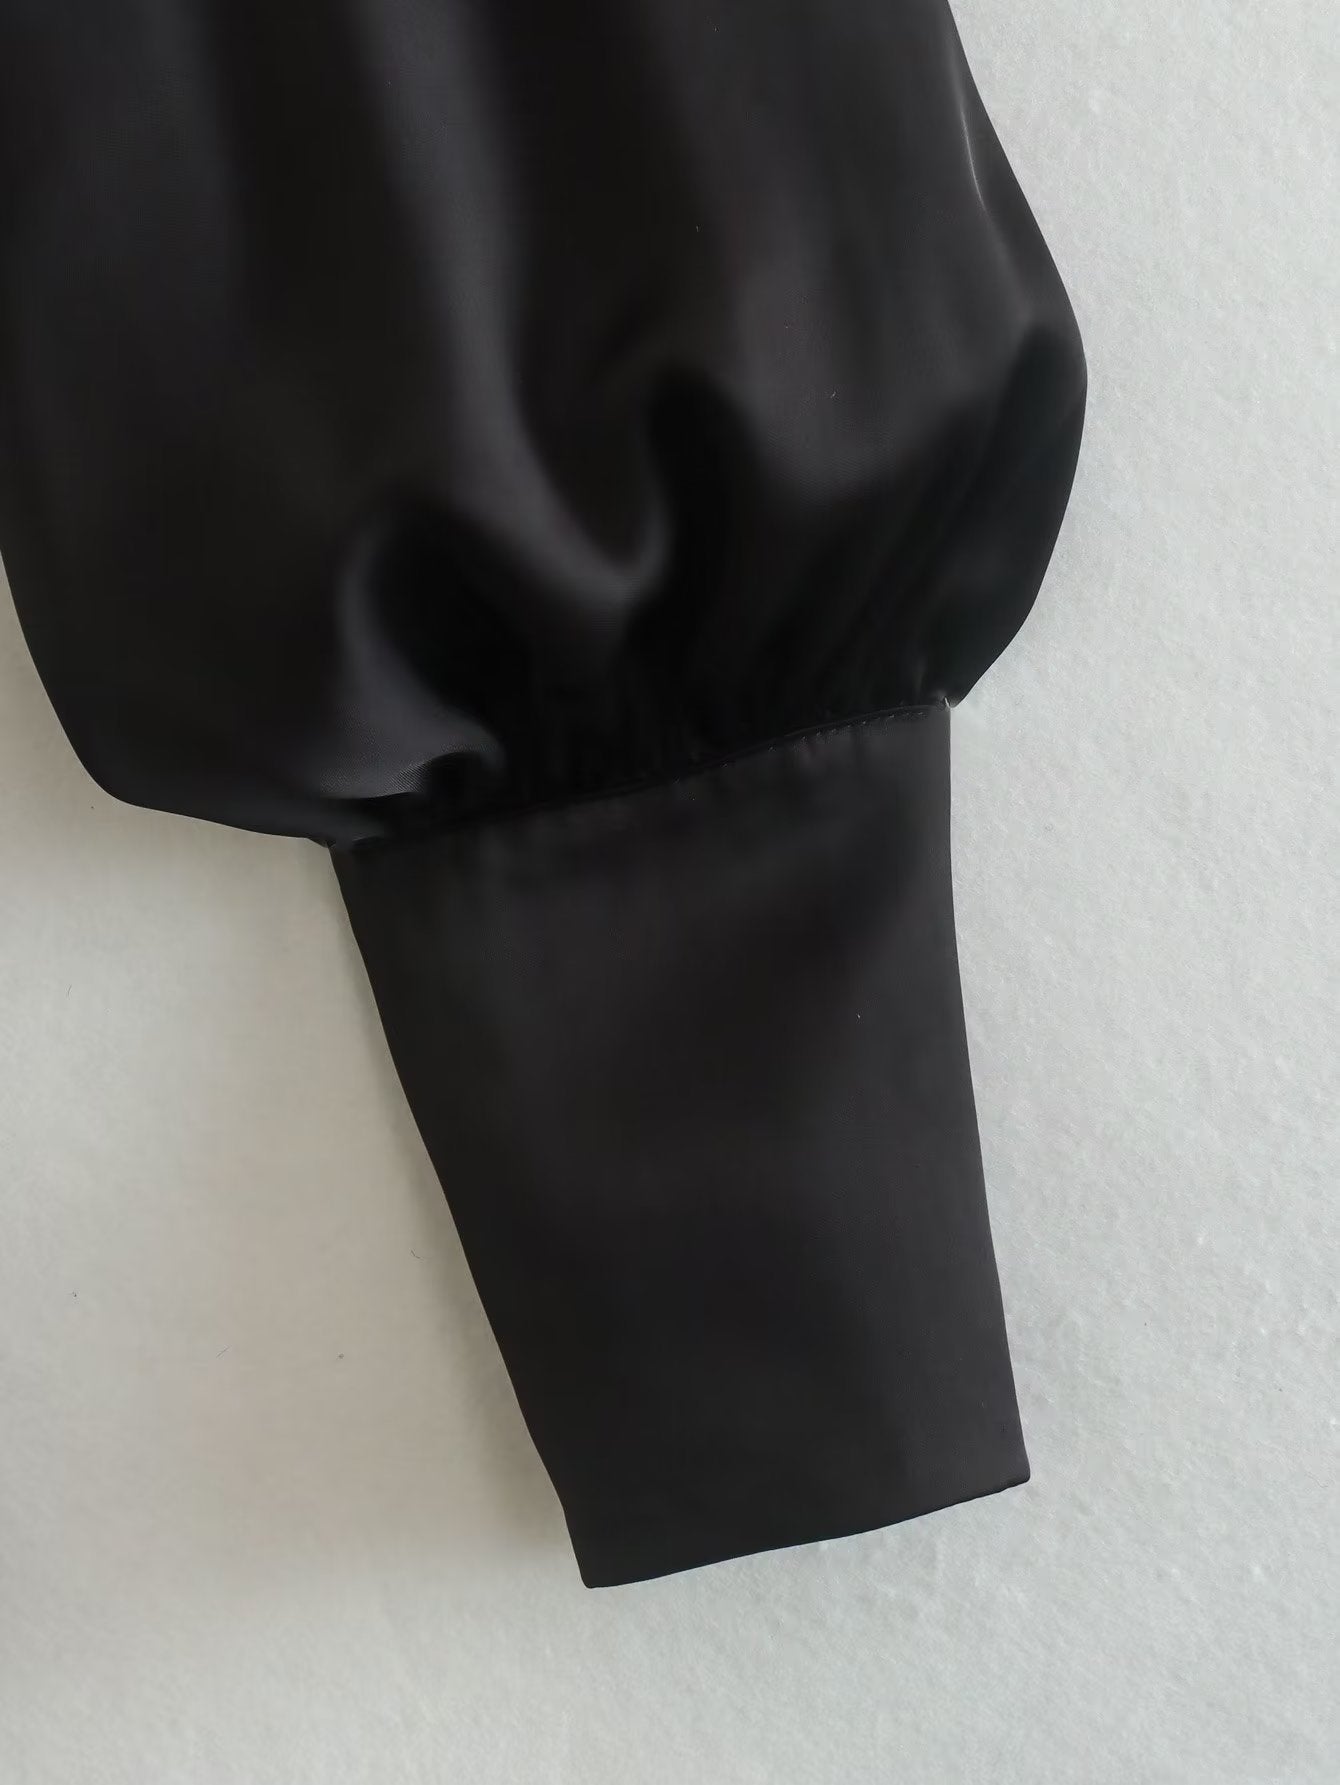 Black Satin Summer Short Blouses for Women-Shirts & Tops-Black-S-Free Shipping Leatheretro